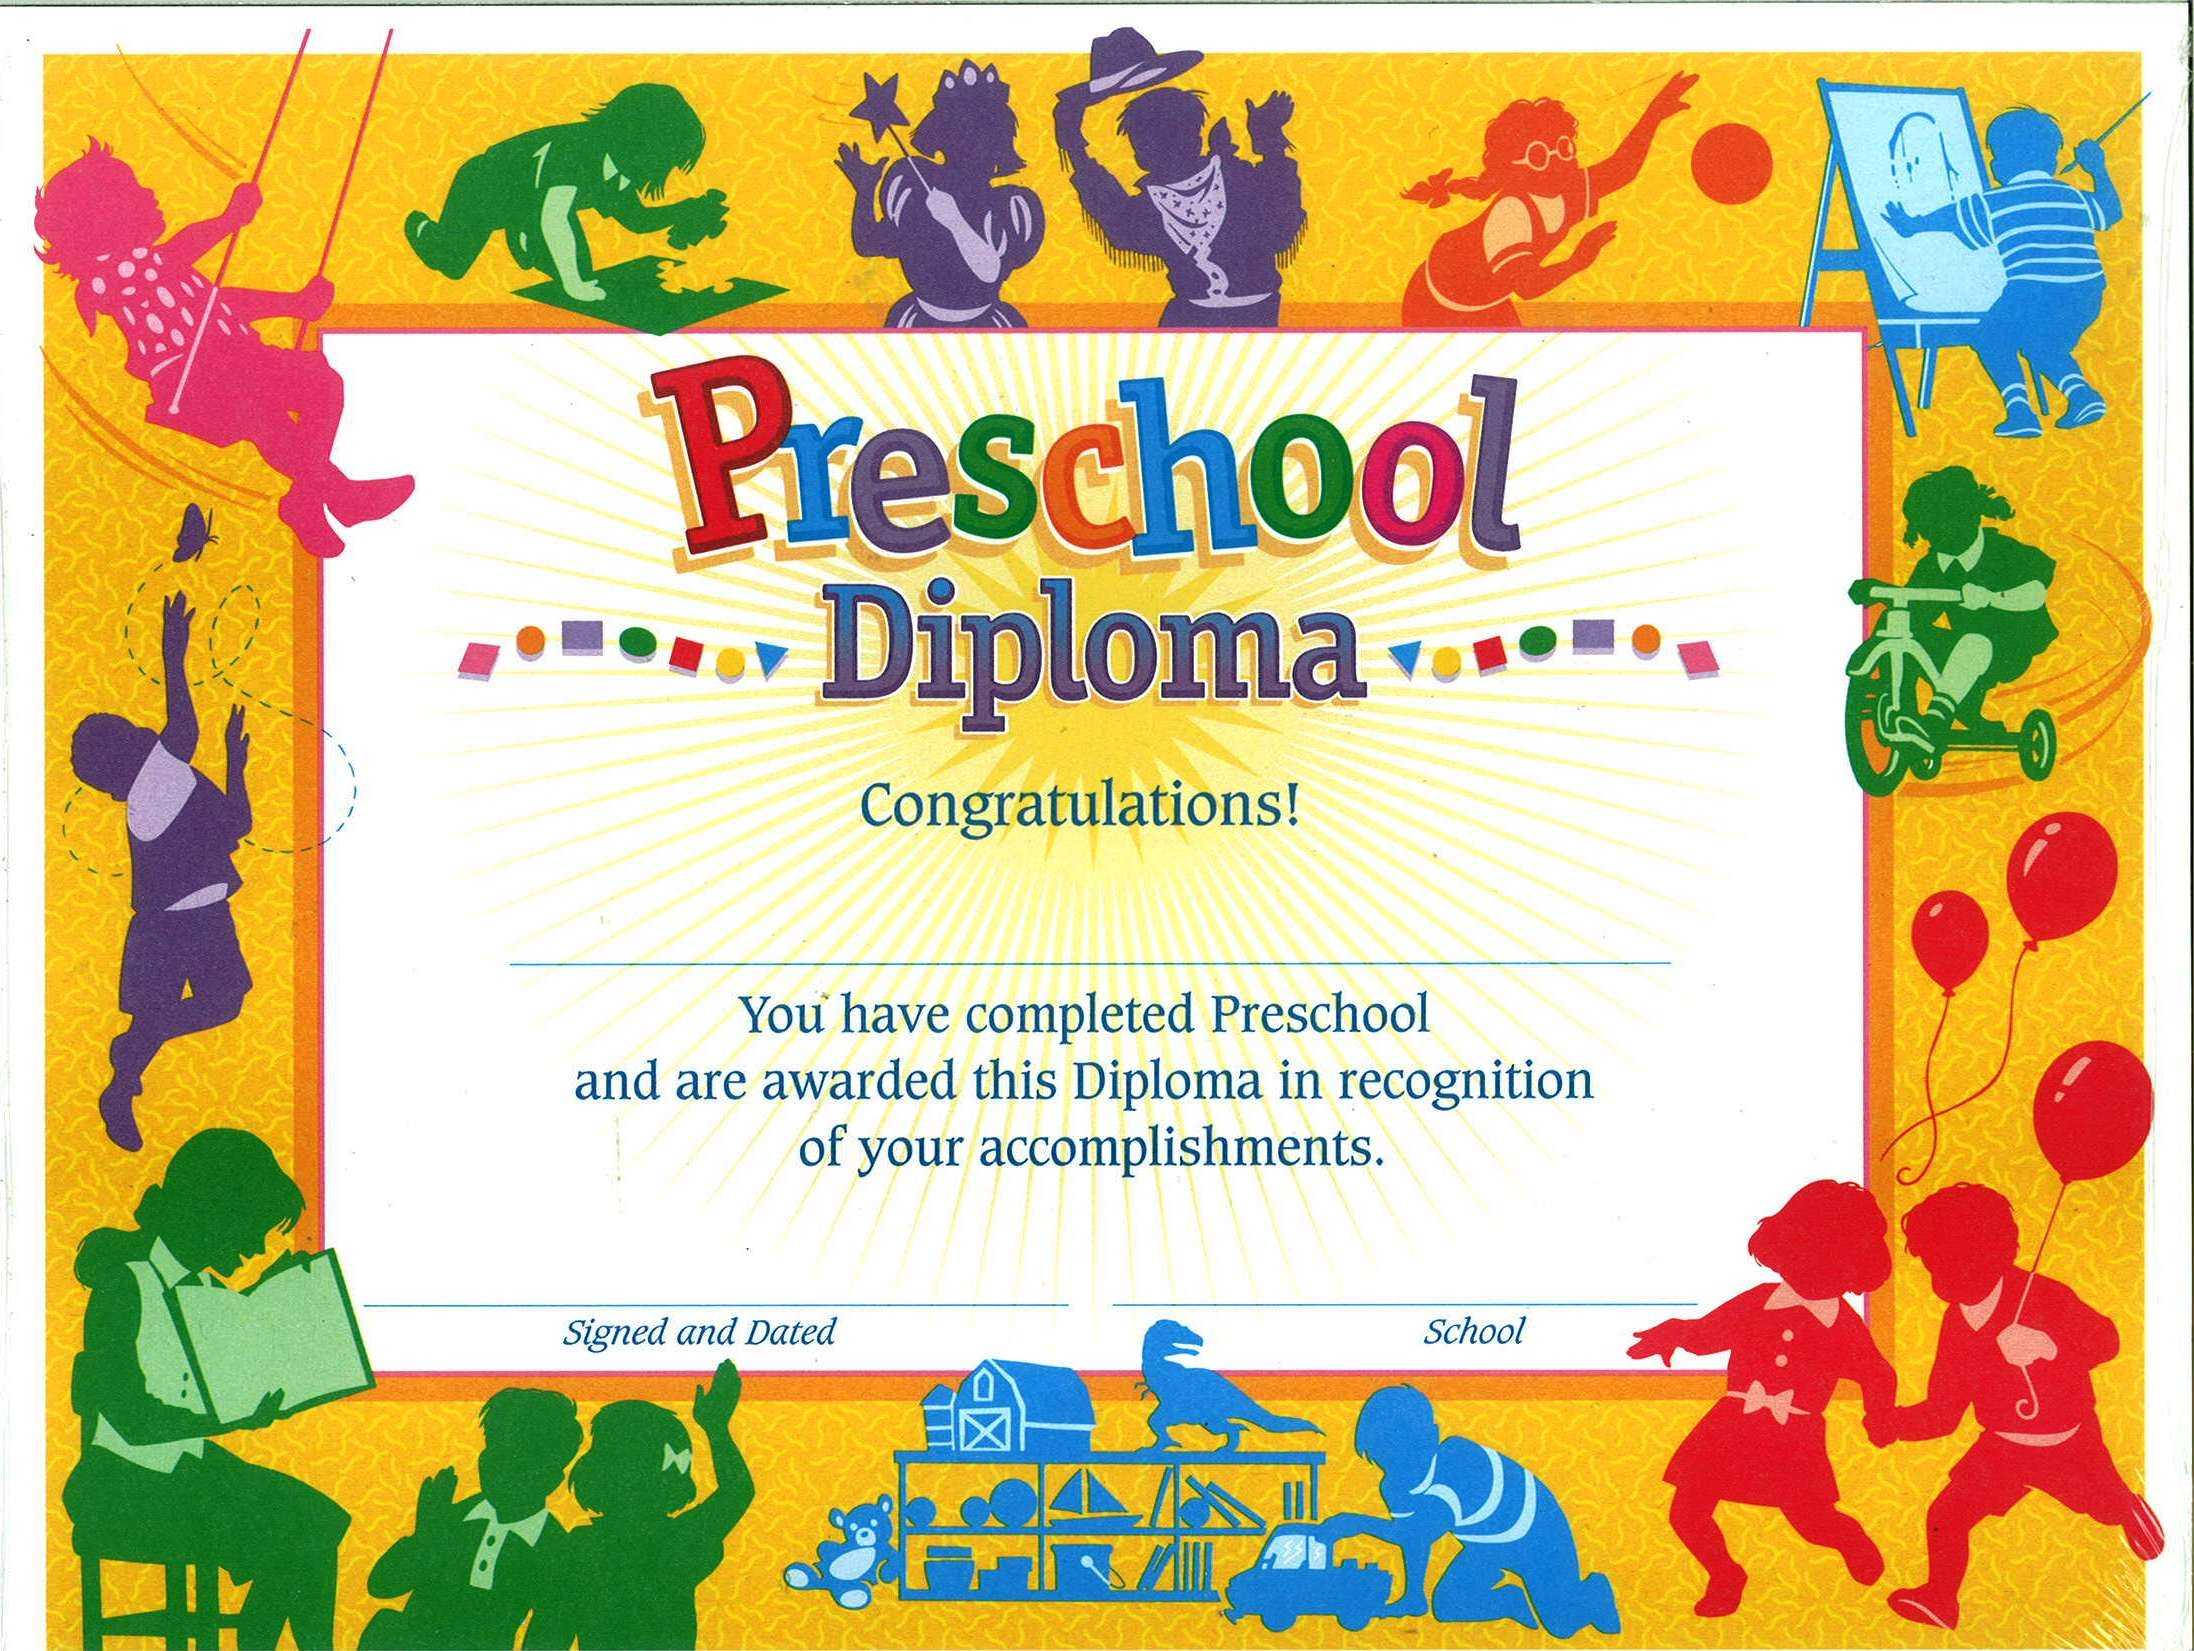 11+ Preschool Certificate Templates – Pdf | Free & Premium With Regard To School Certificate Templates Free